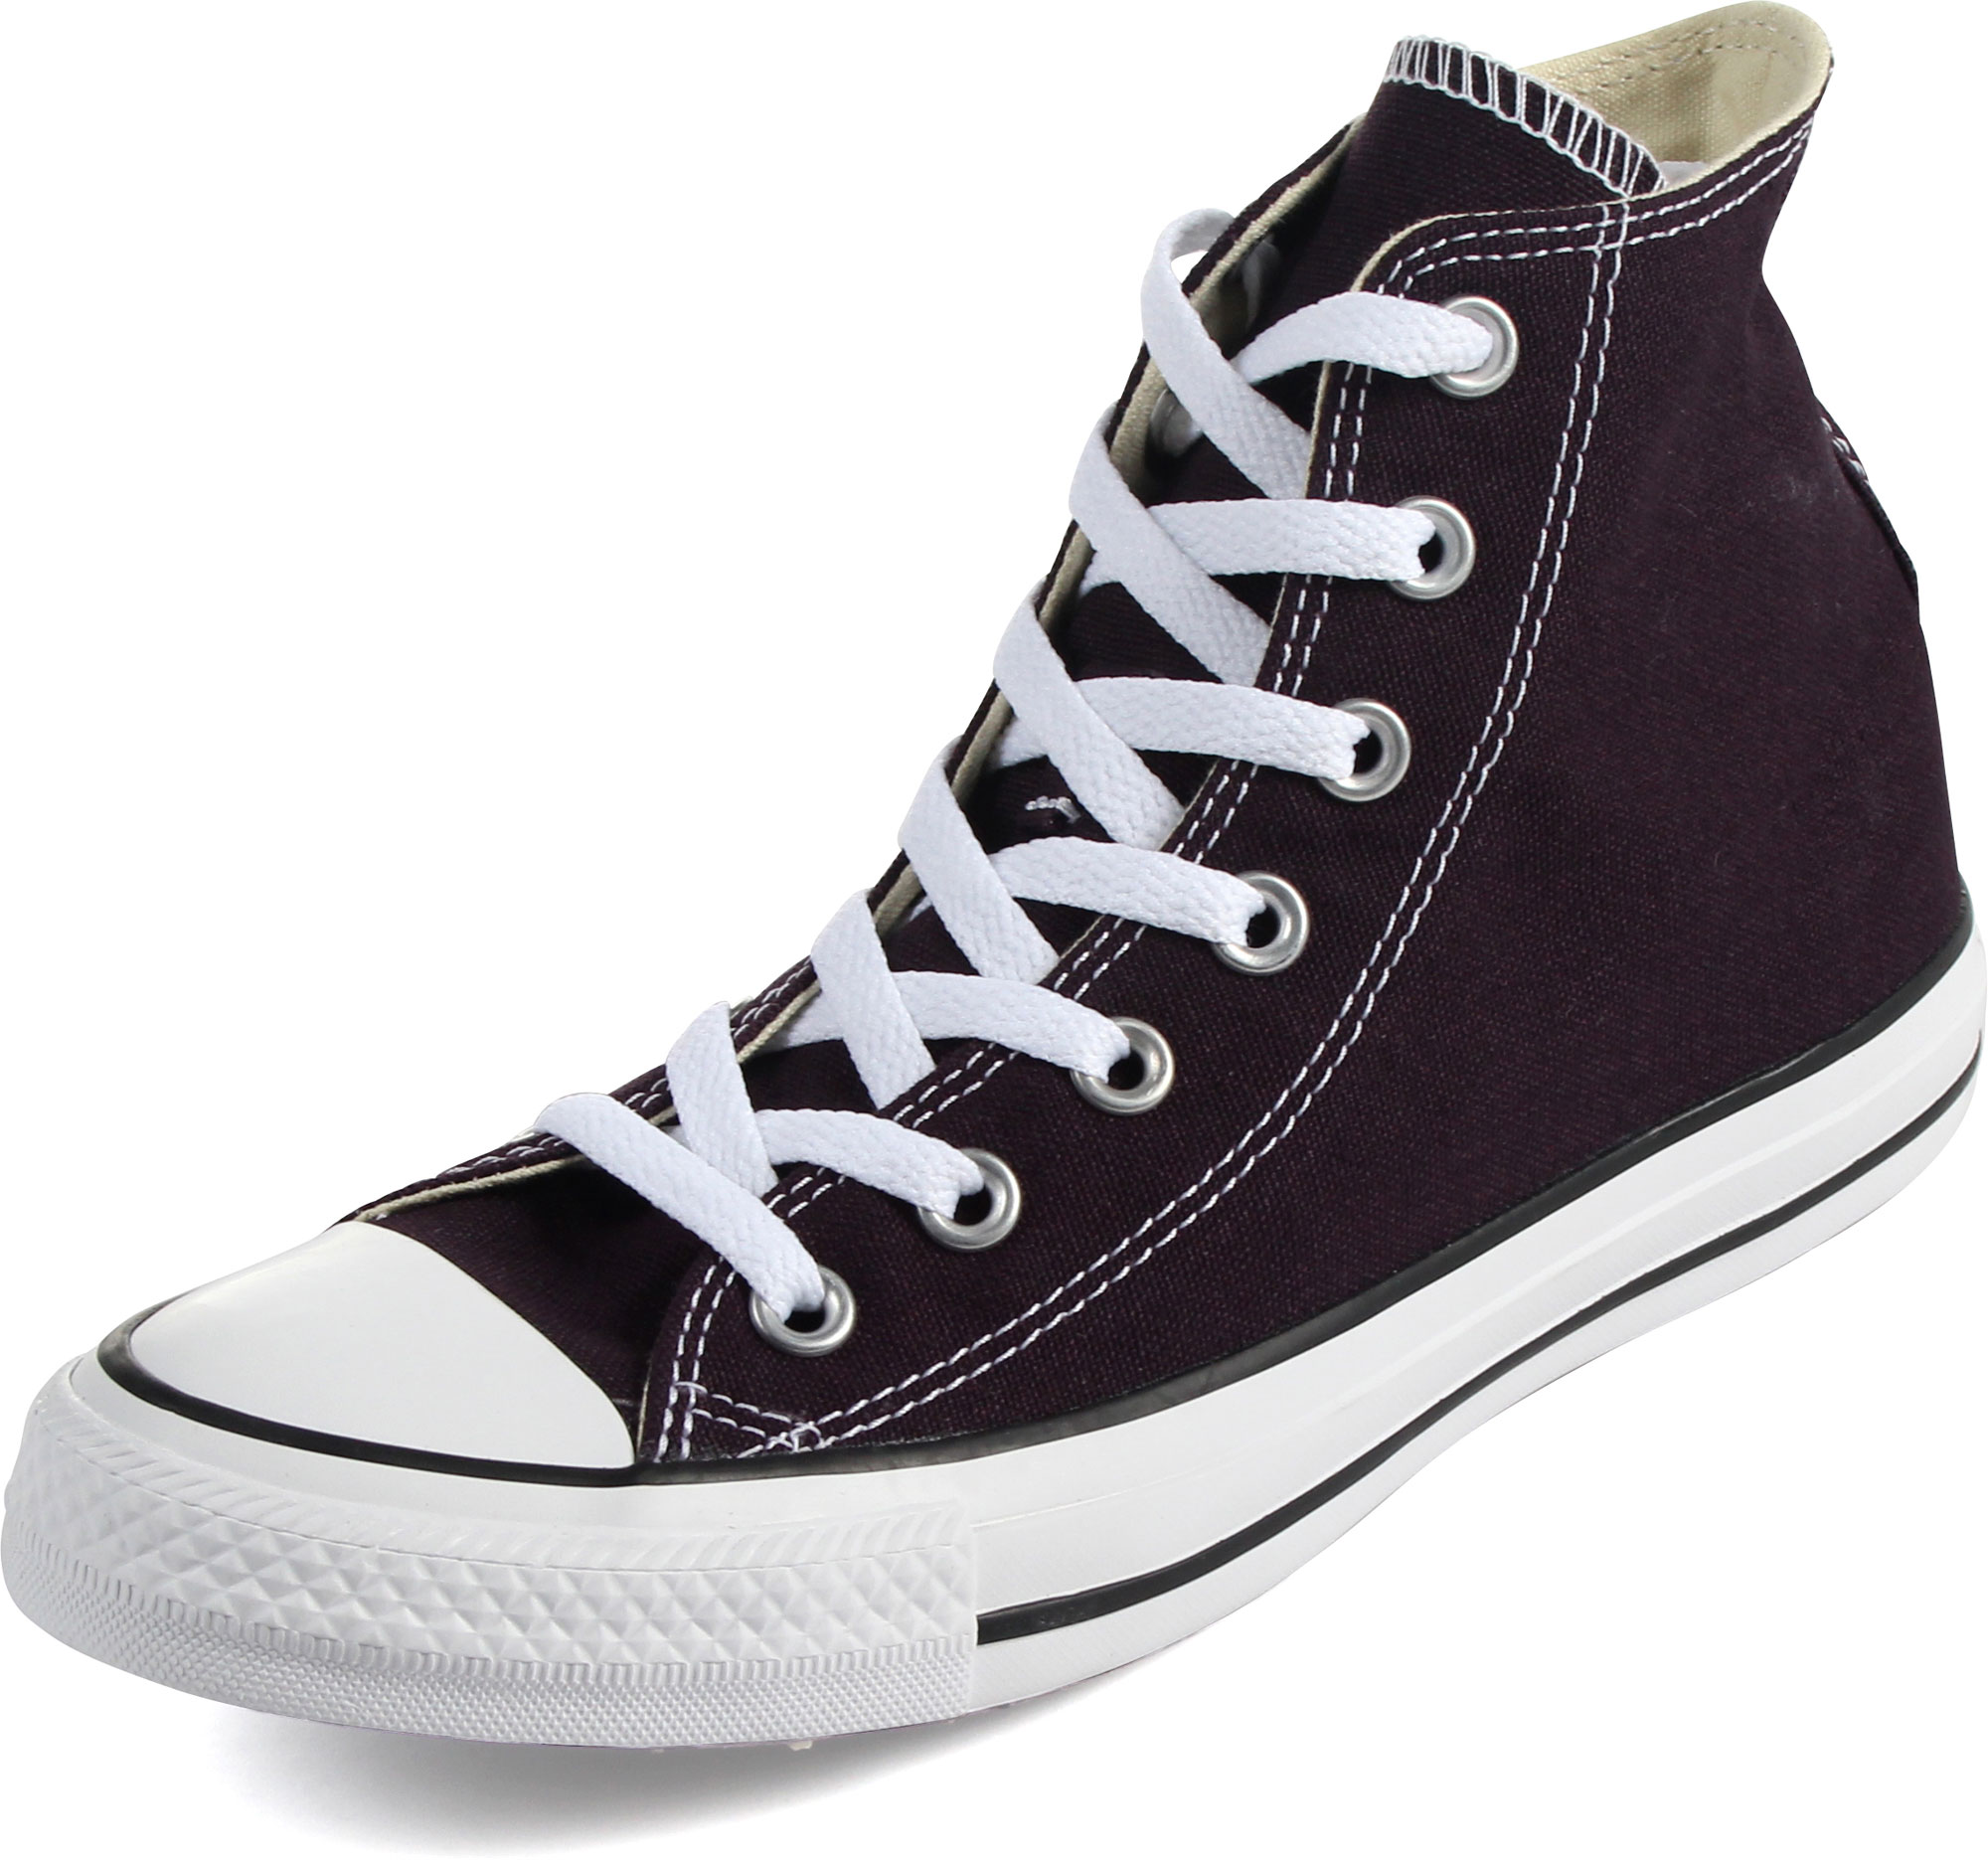 Converse - Chuck Taylor All Star Black Cherry High top Shoes